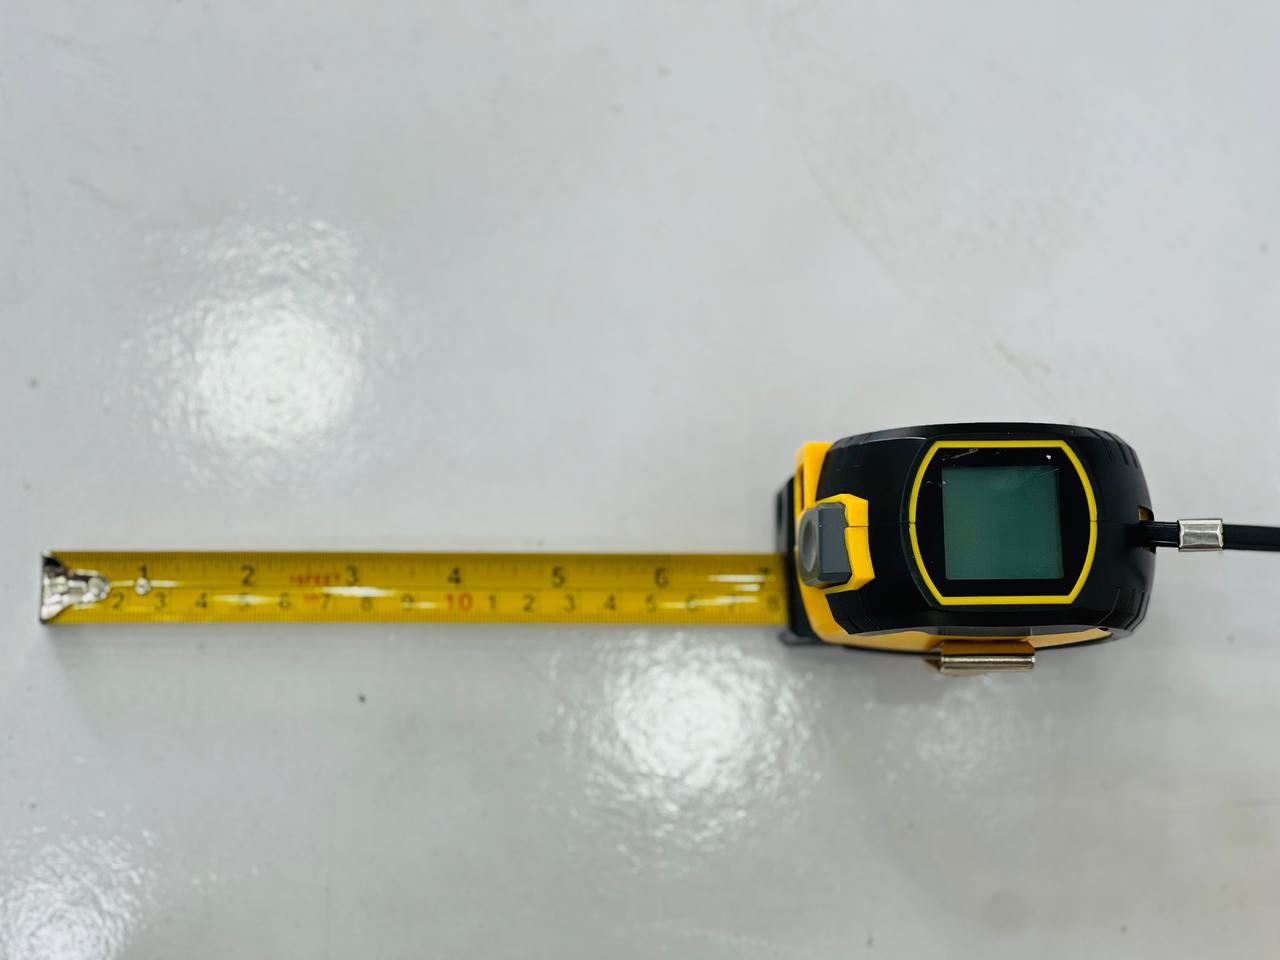 متر لیزری ۳کاره طرح دیوالتlaser tape measure